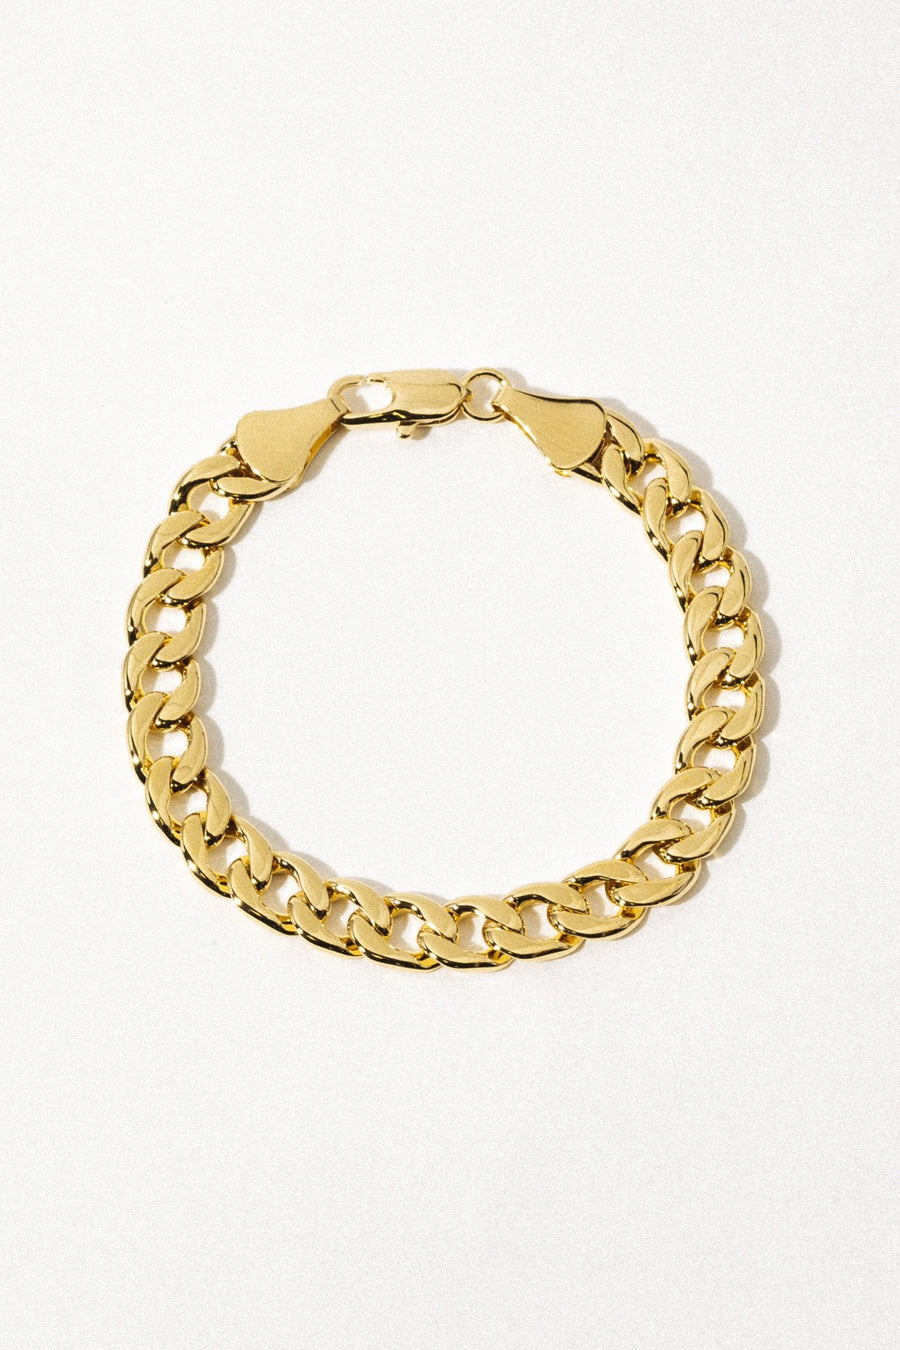 Goddess Jewelry Gold El Cubano Bracelet